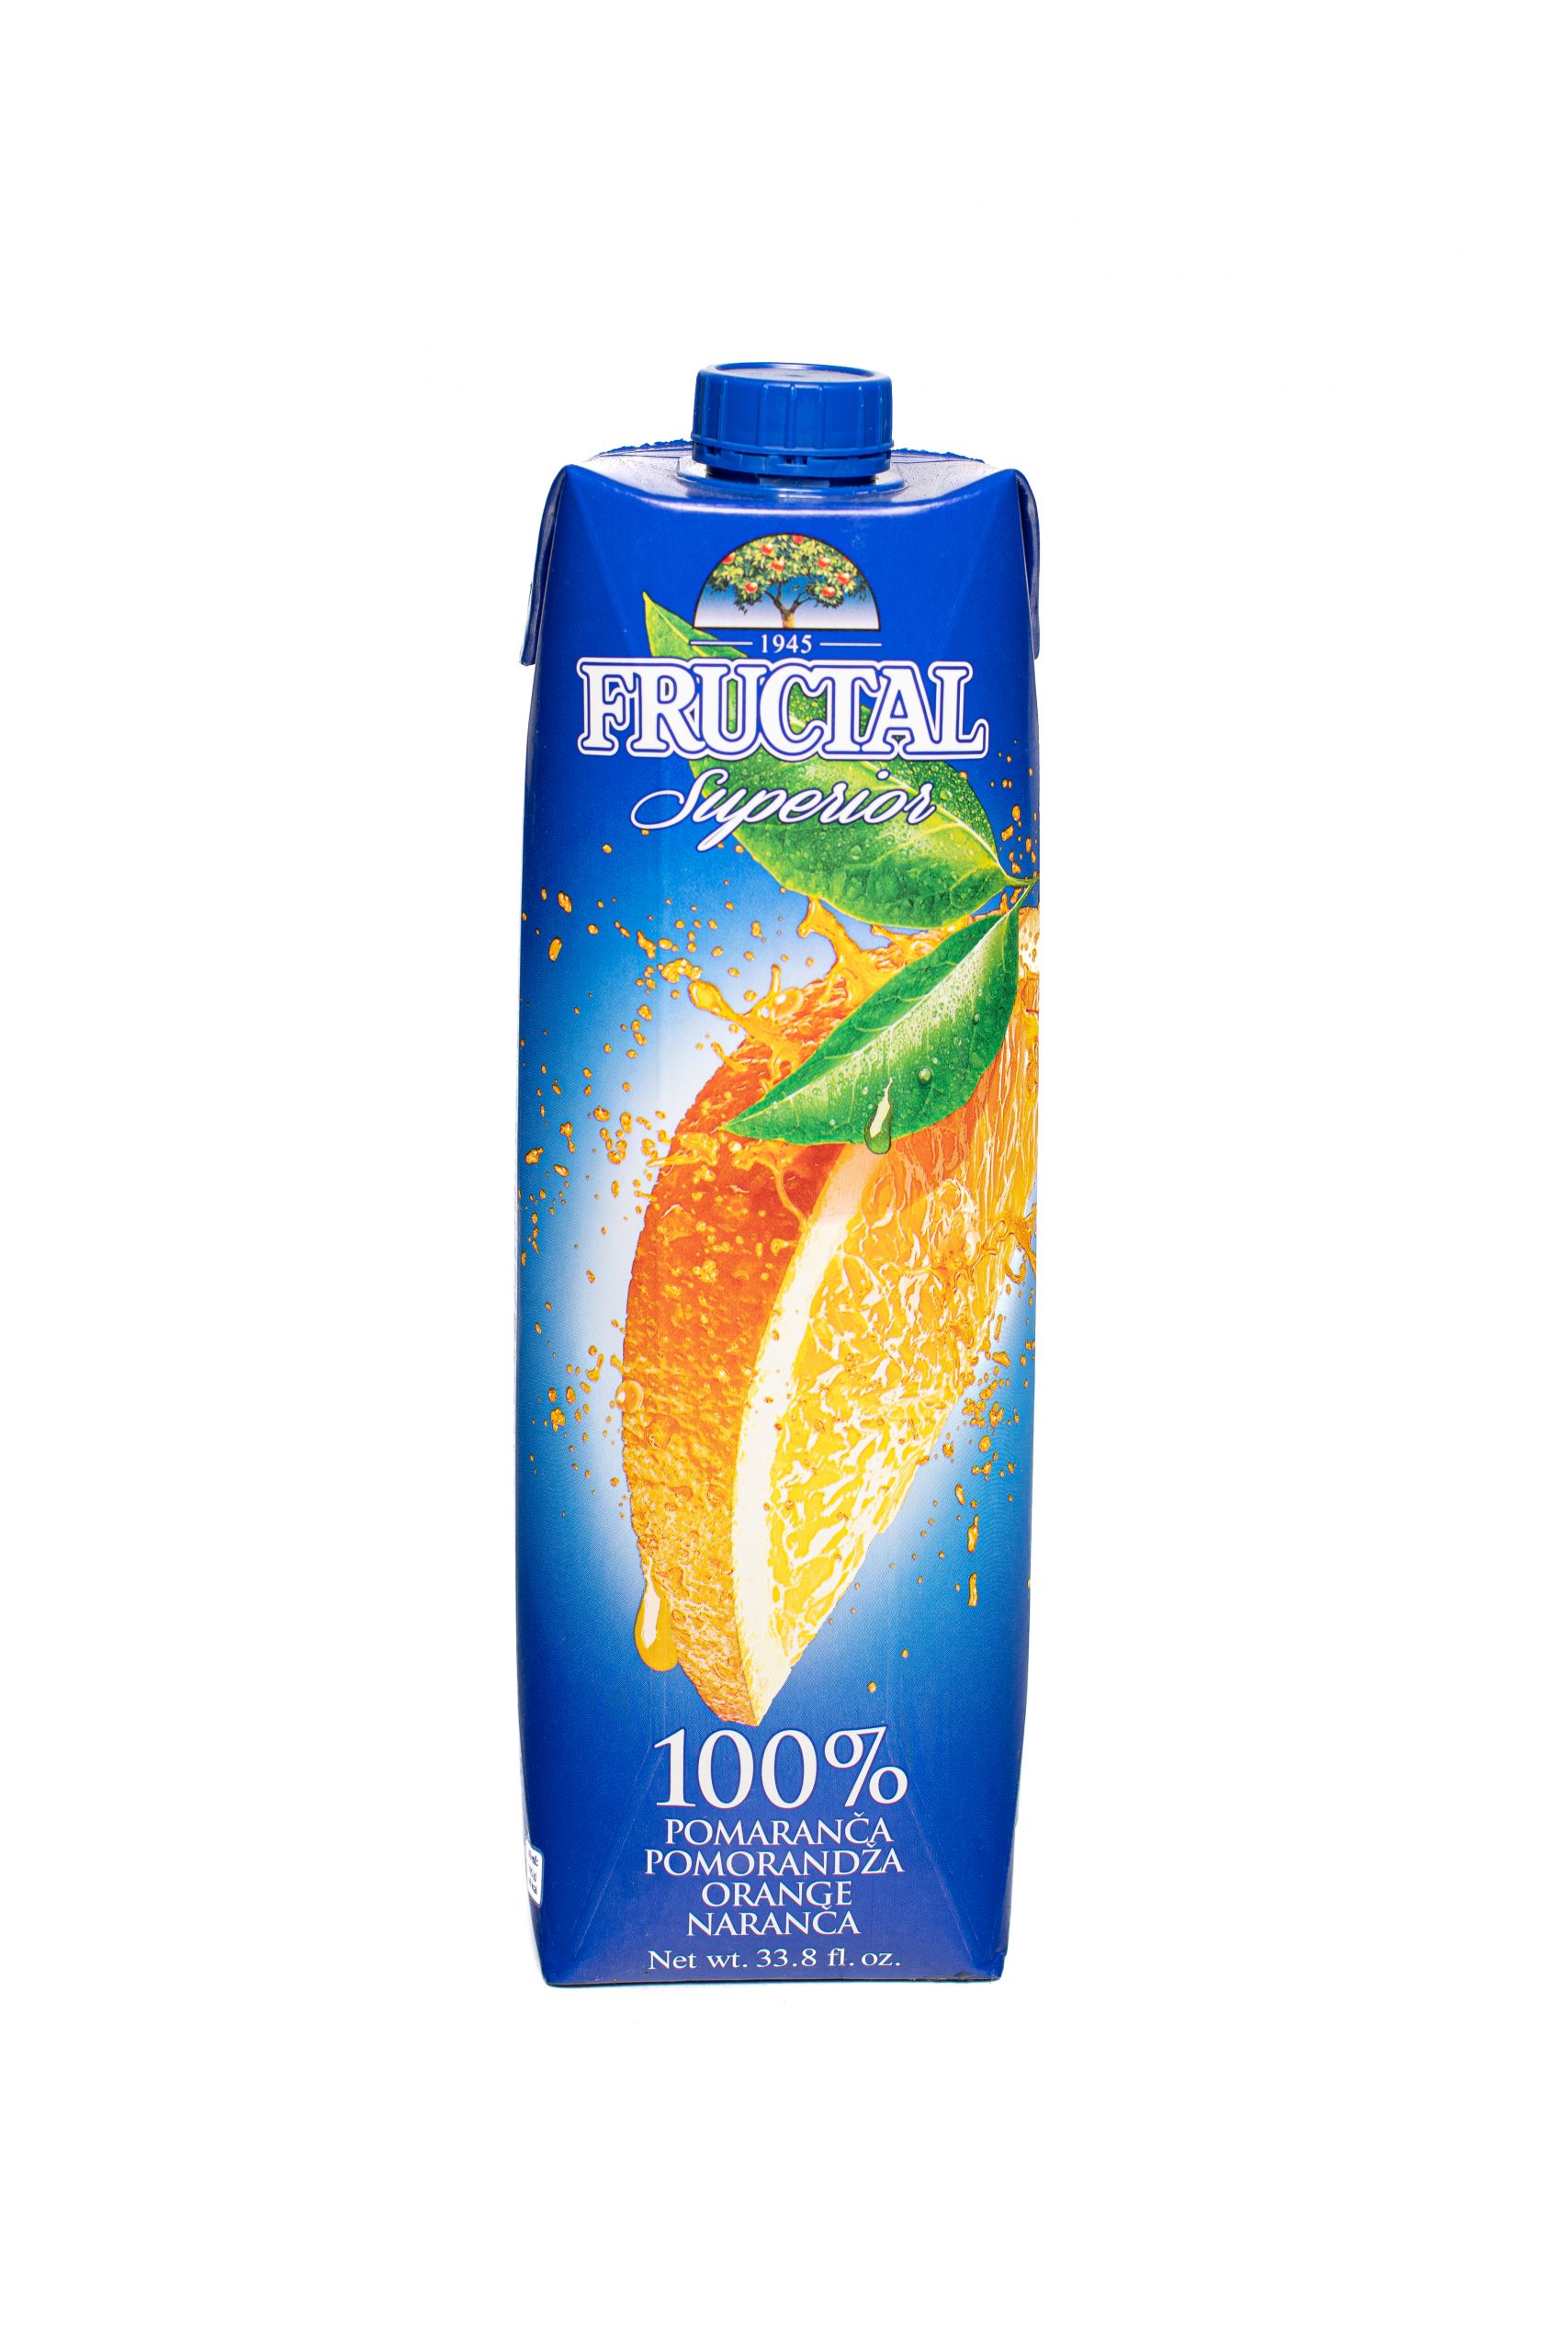 Fructal Superior | 1L | Orange